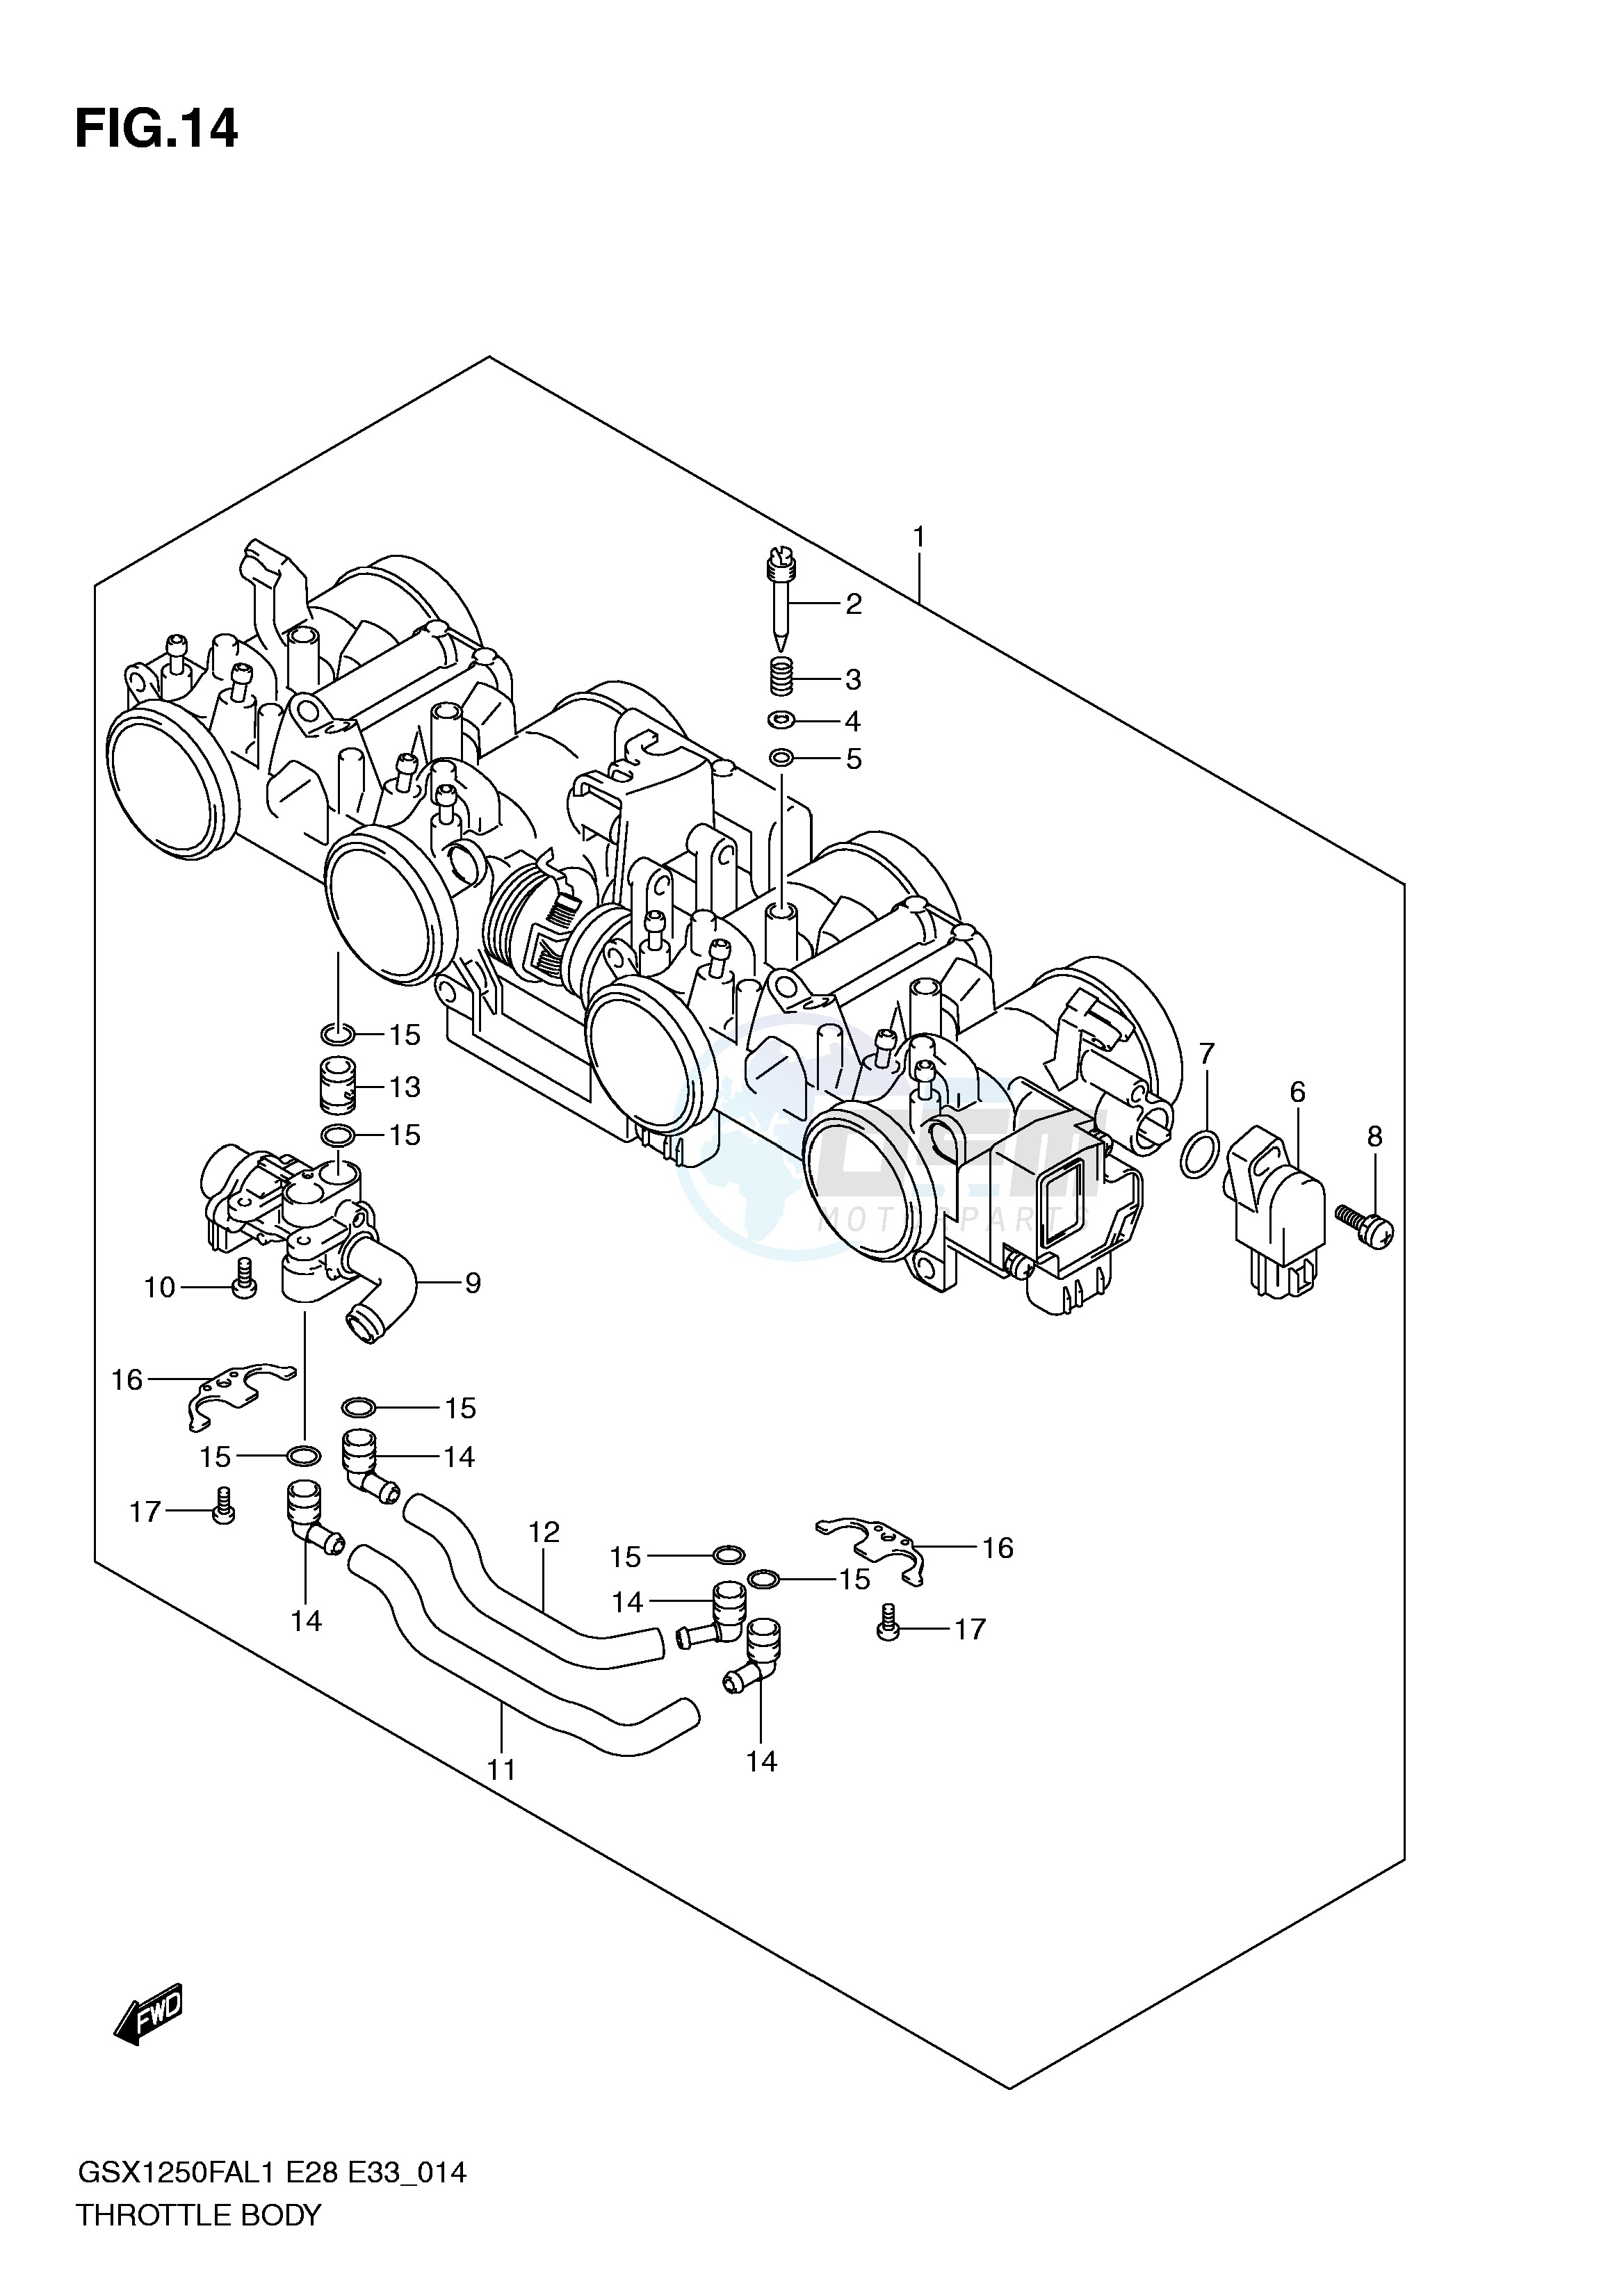 THROTTLE BODY (GSX1250FAL1 E33) blueprint